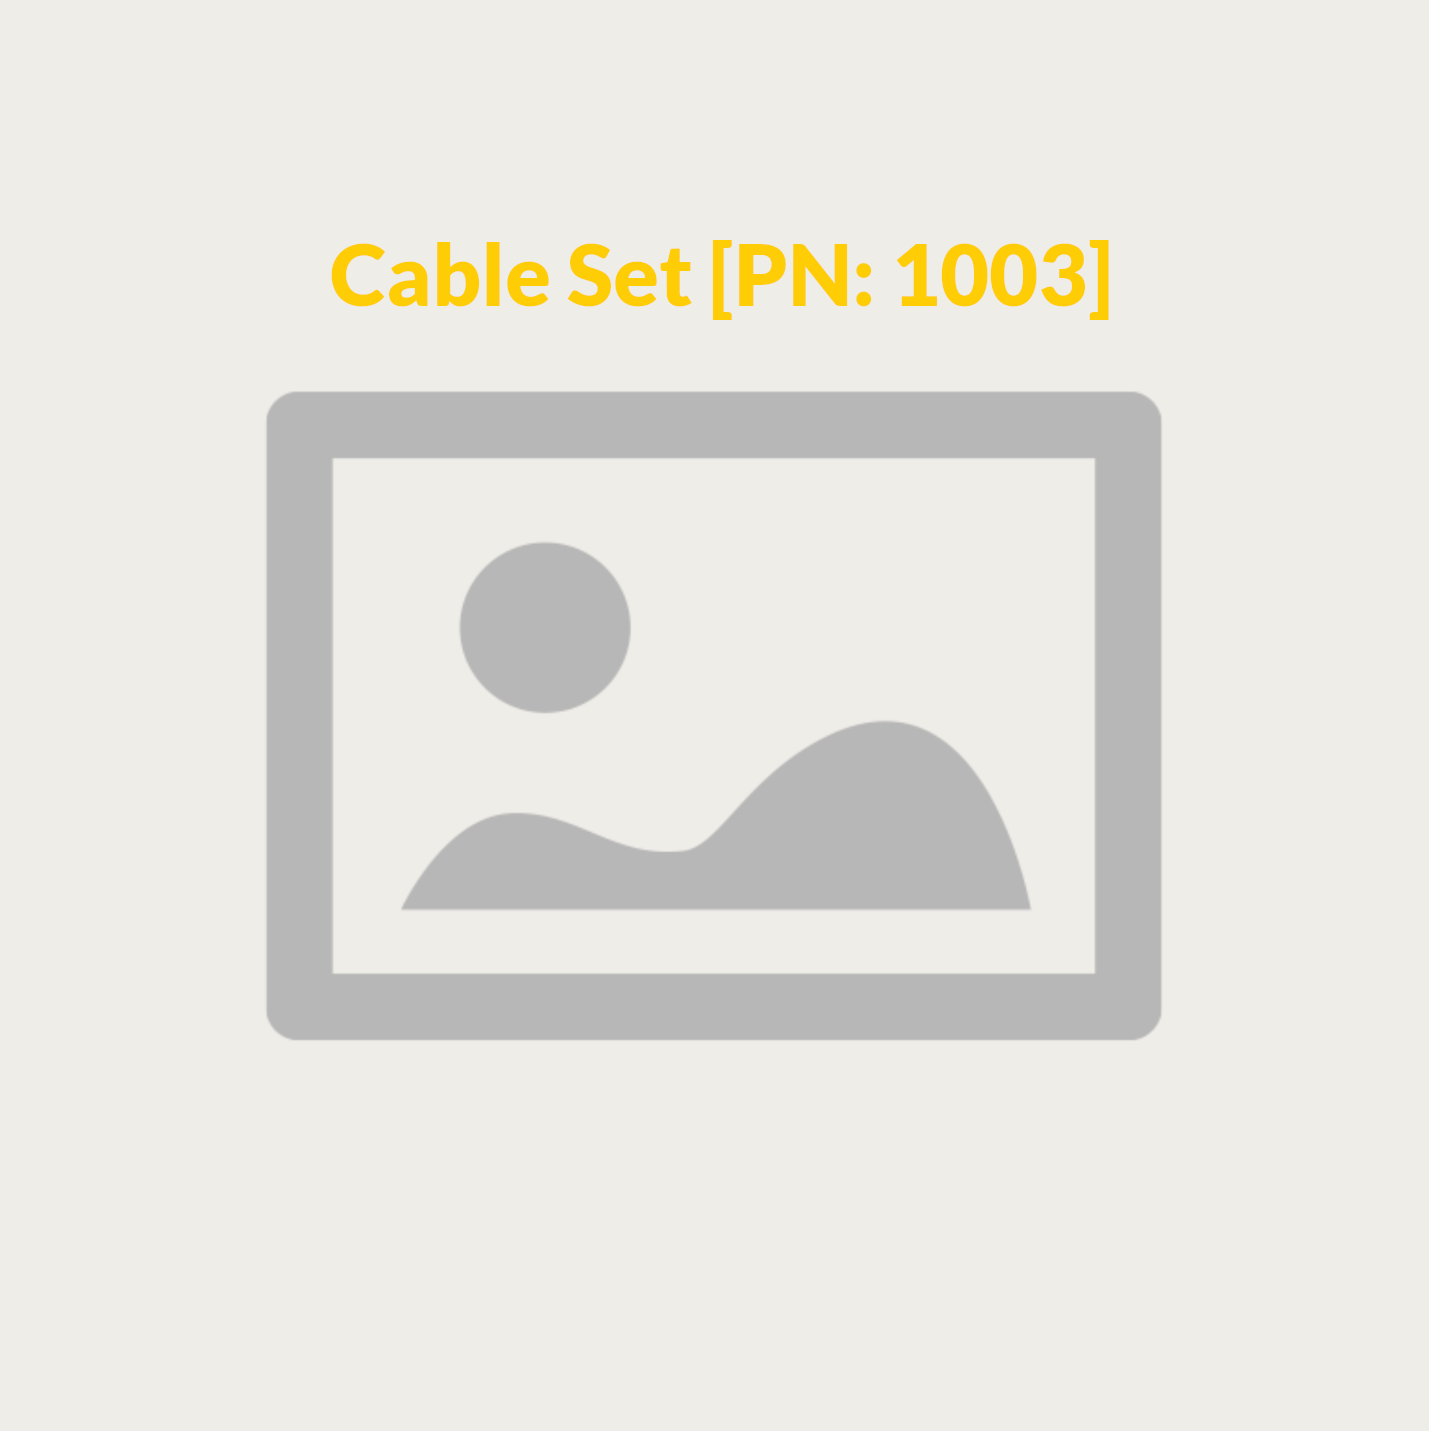 Bundle: YETI + YAK + Cable Set [PN: 1008]